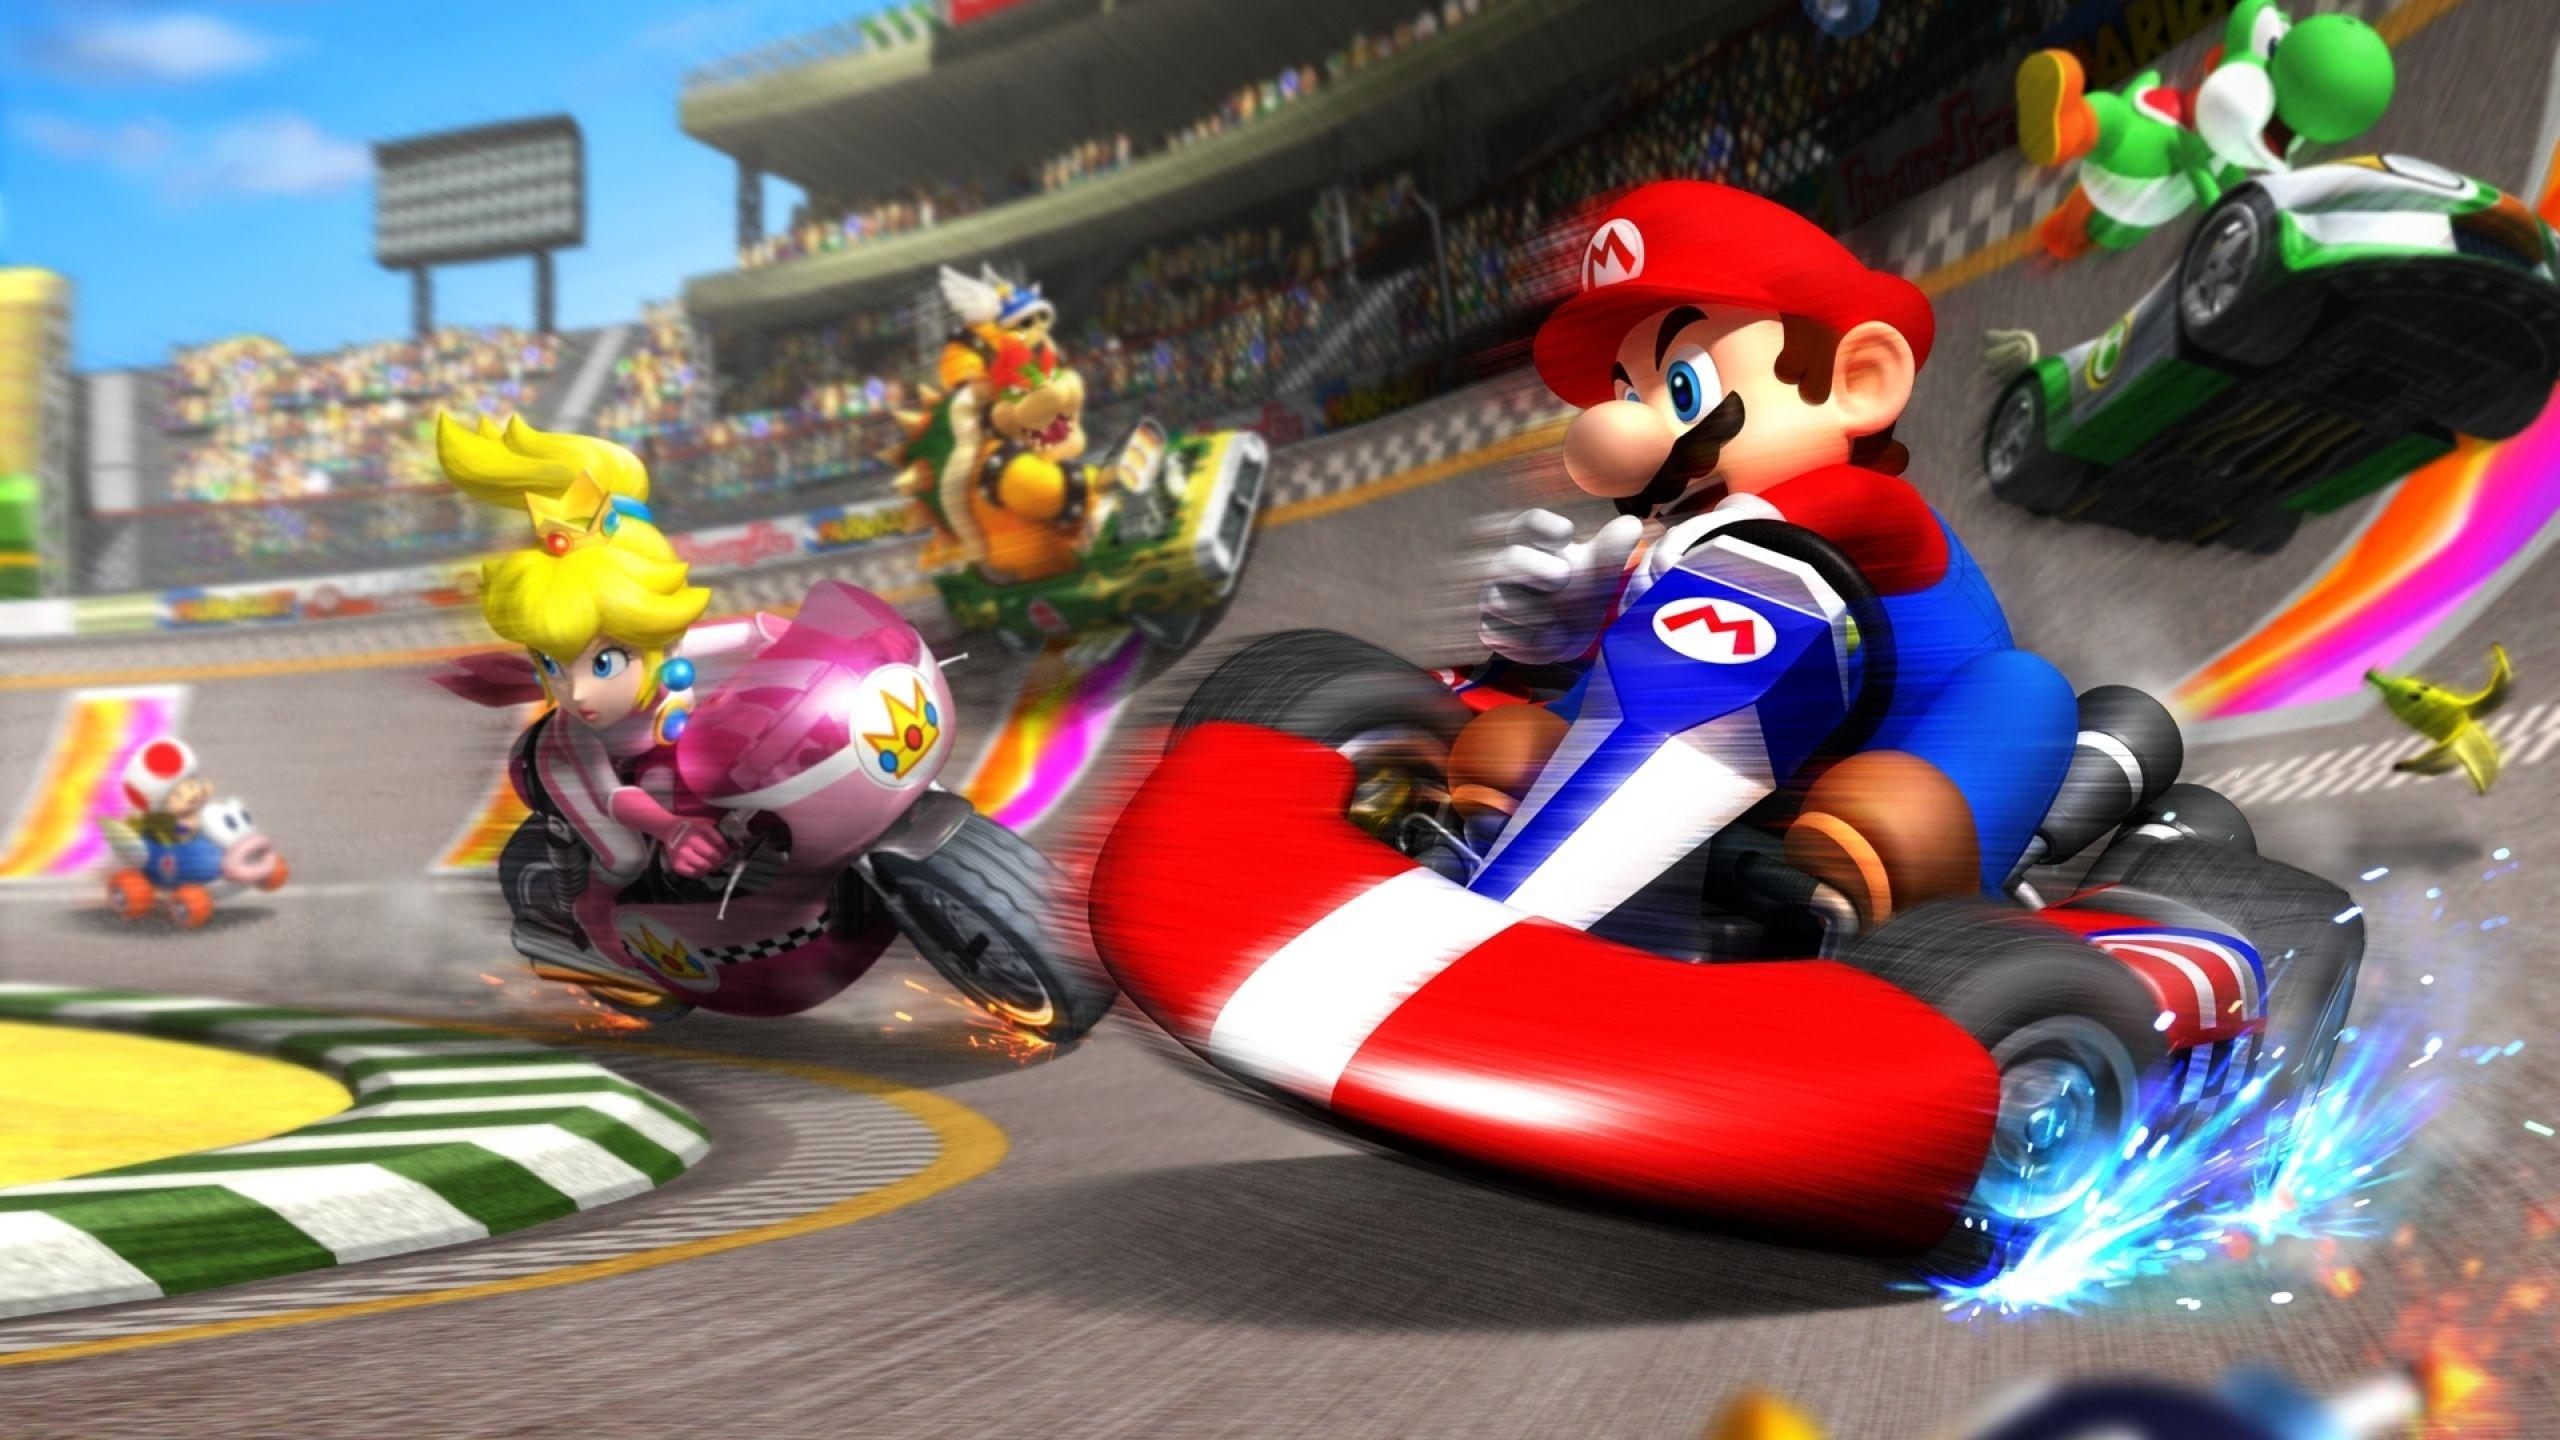 Mario Kart HD Wallpaper, Backgrounds Image